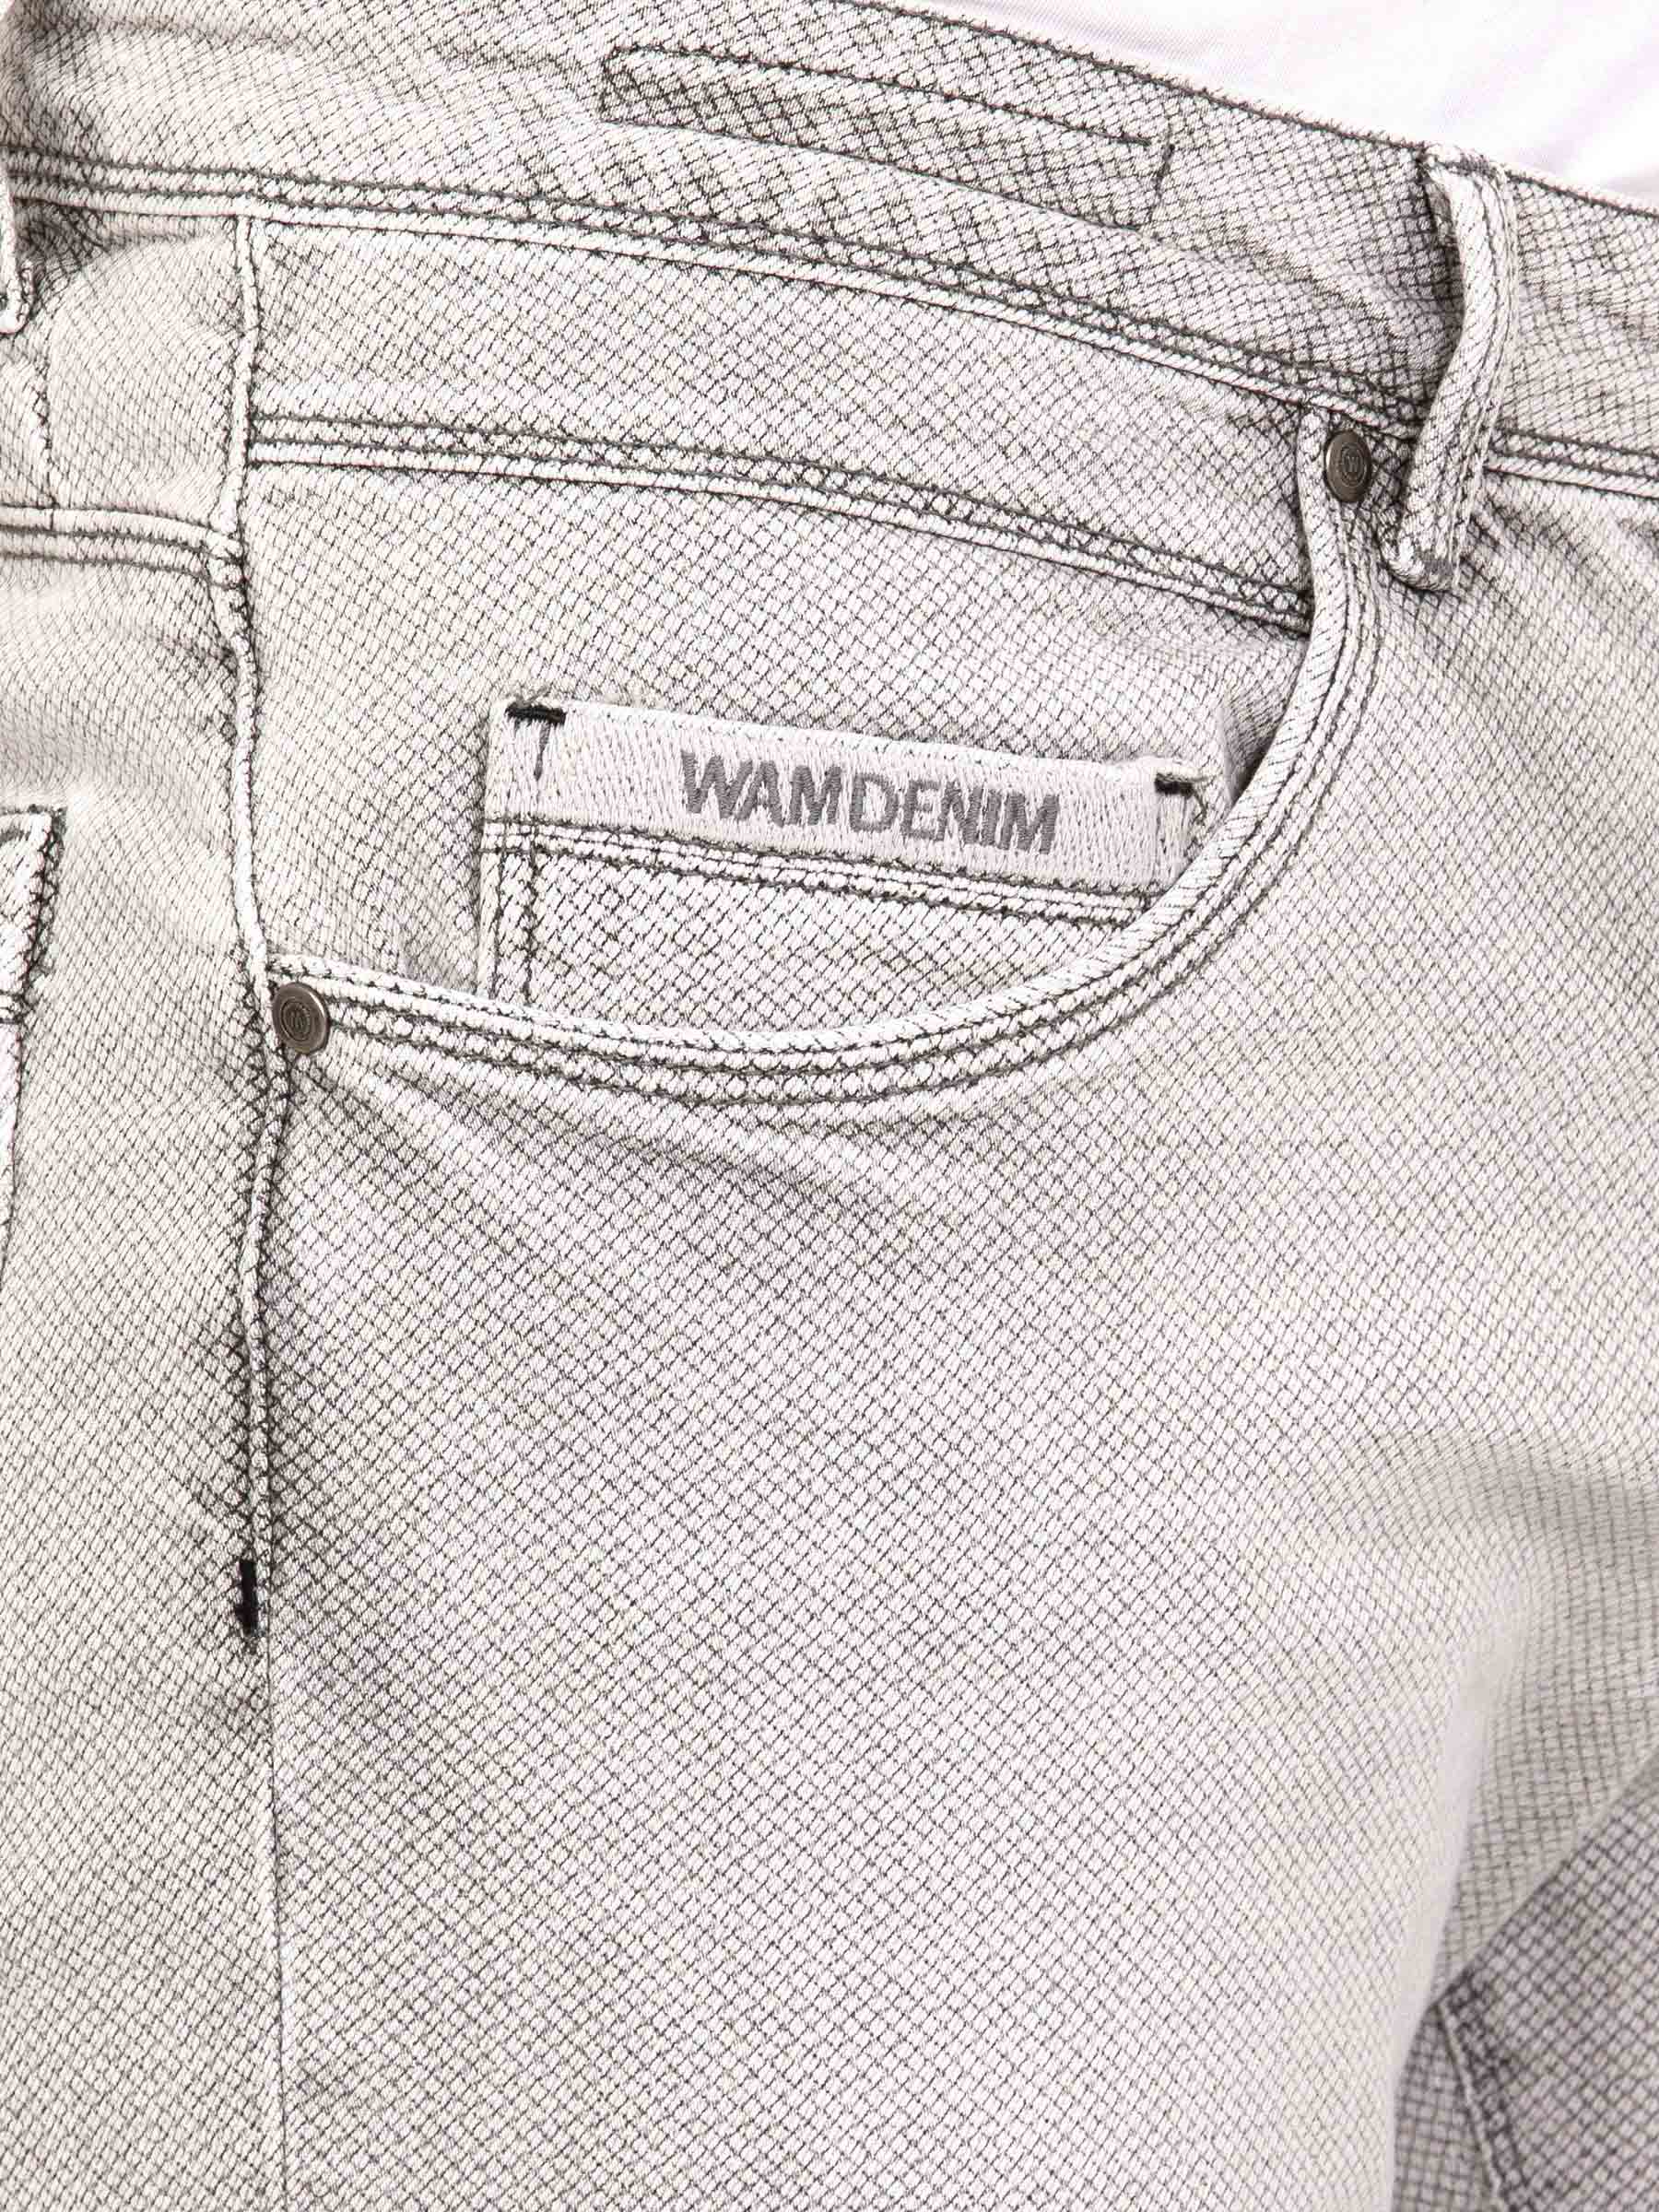 Hanneman Micro Textured Grey Short